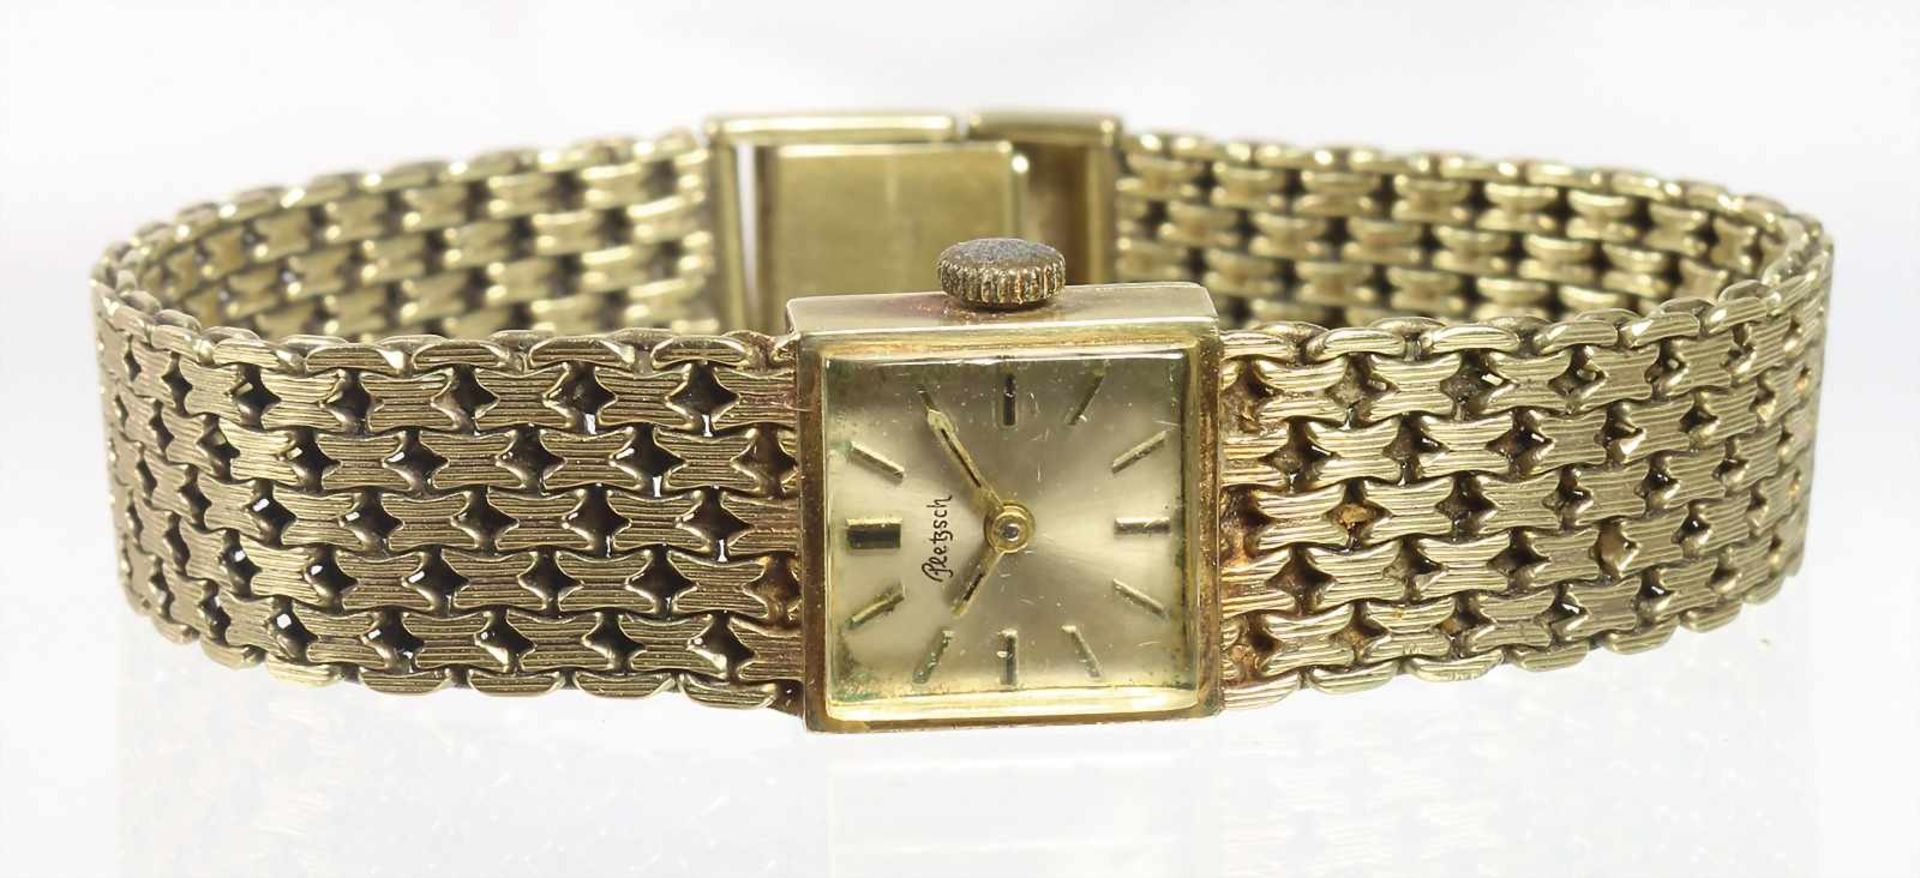 Damen-Armbanduhr "PLETSCH", GG 585/000, sig.: Pletsch, 4-eckiges Gehäuse, Handaufzug, Klappschließe,